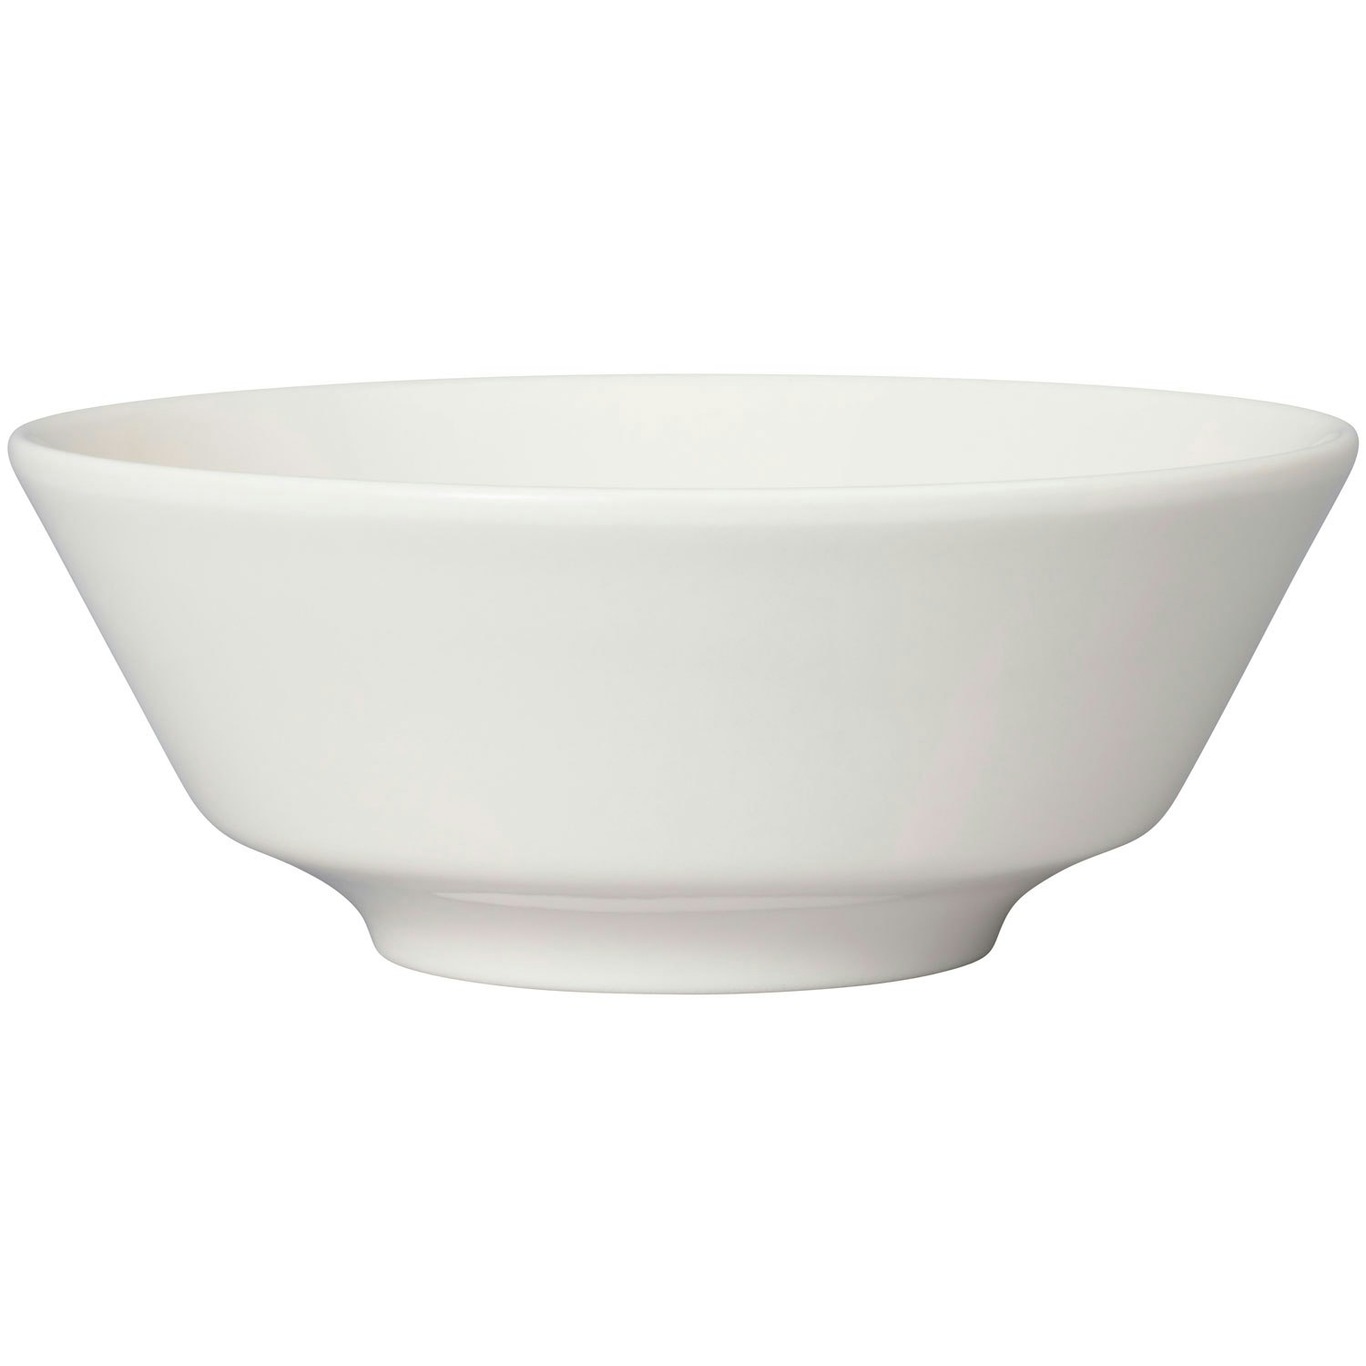 Mainio Bowl White, 13 cm